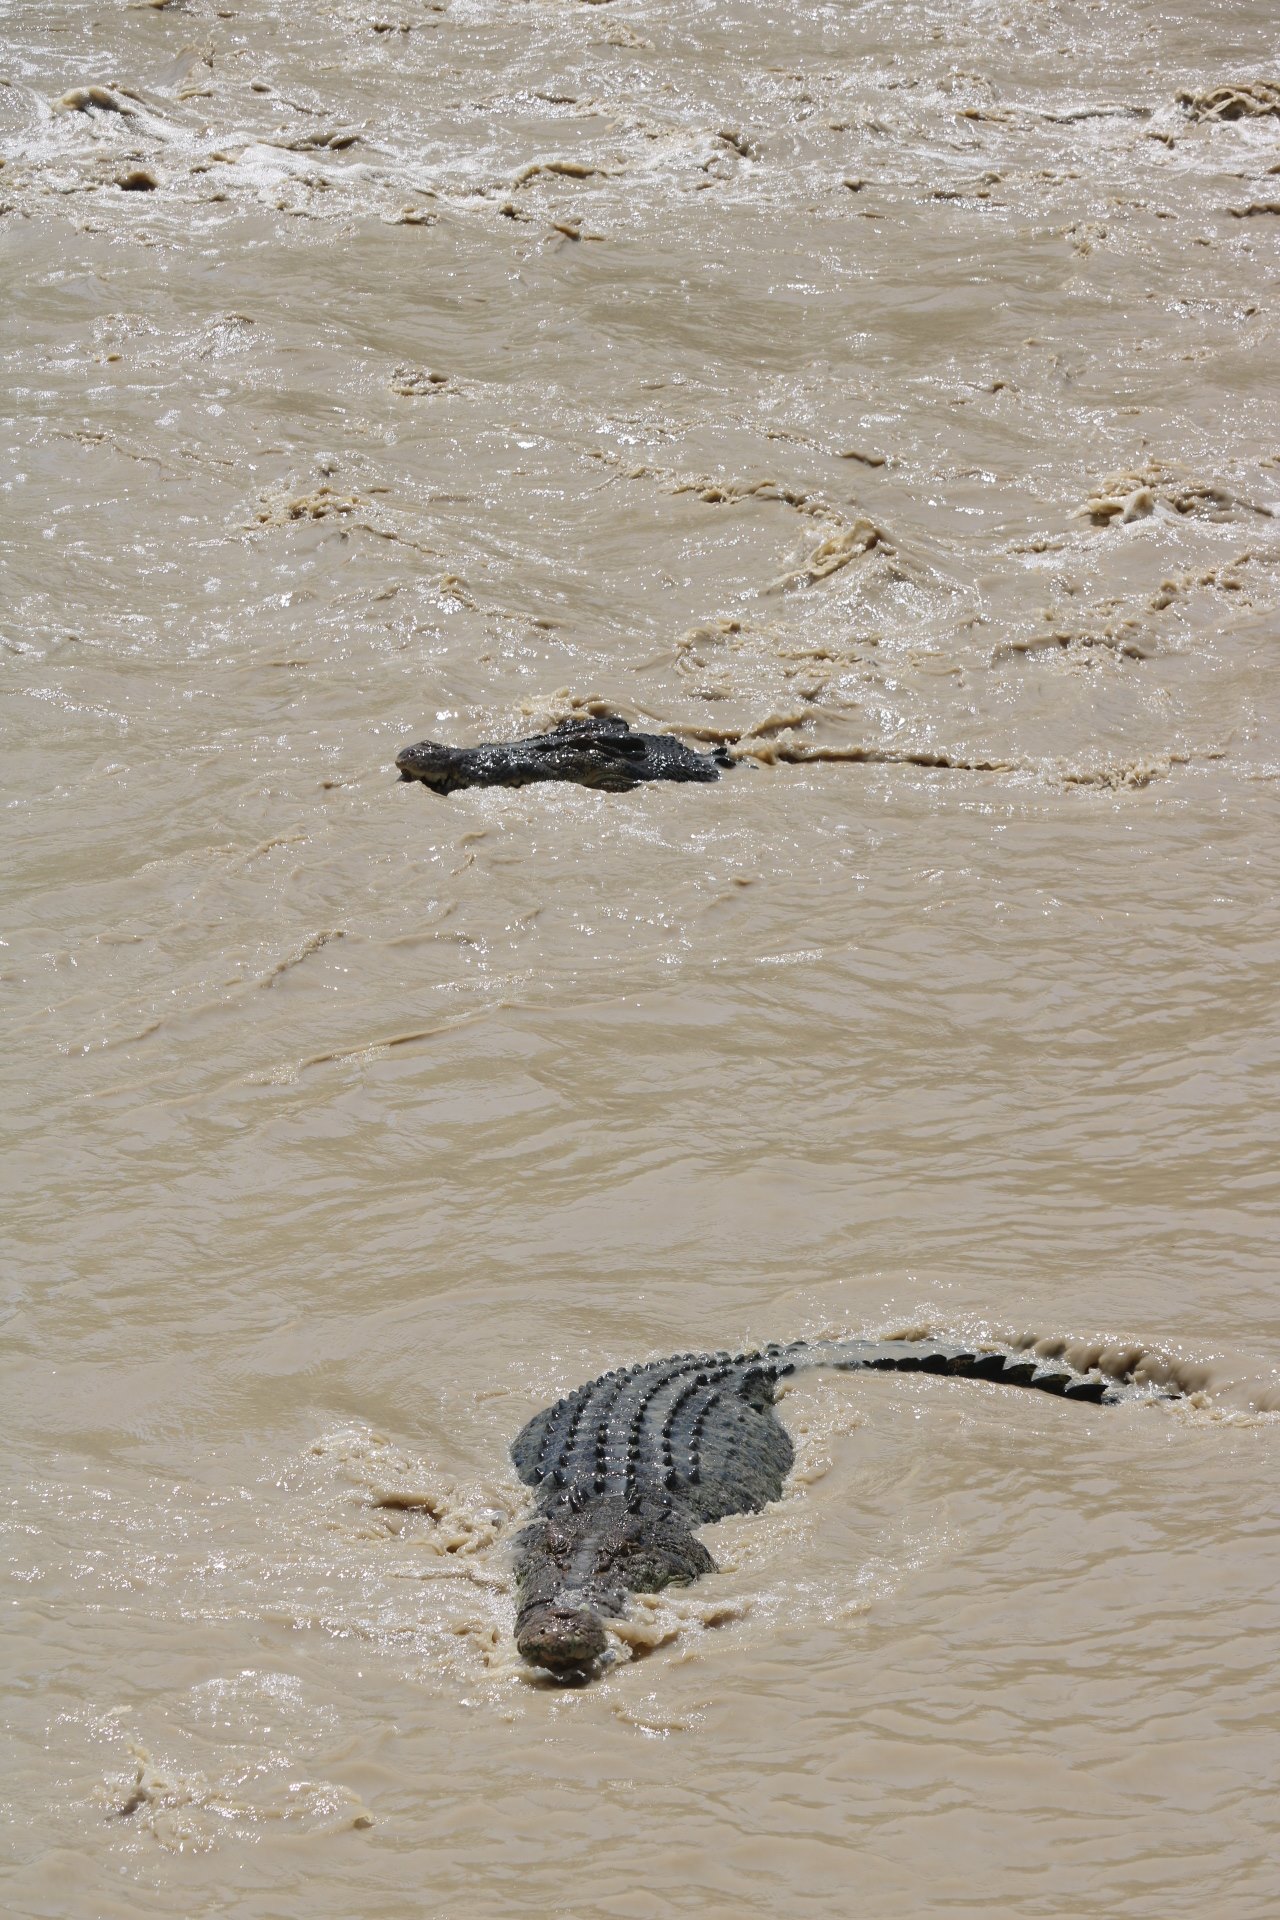 Kakadu Crocodiles